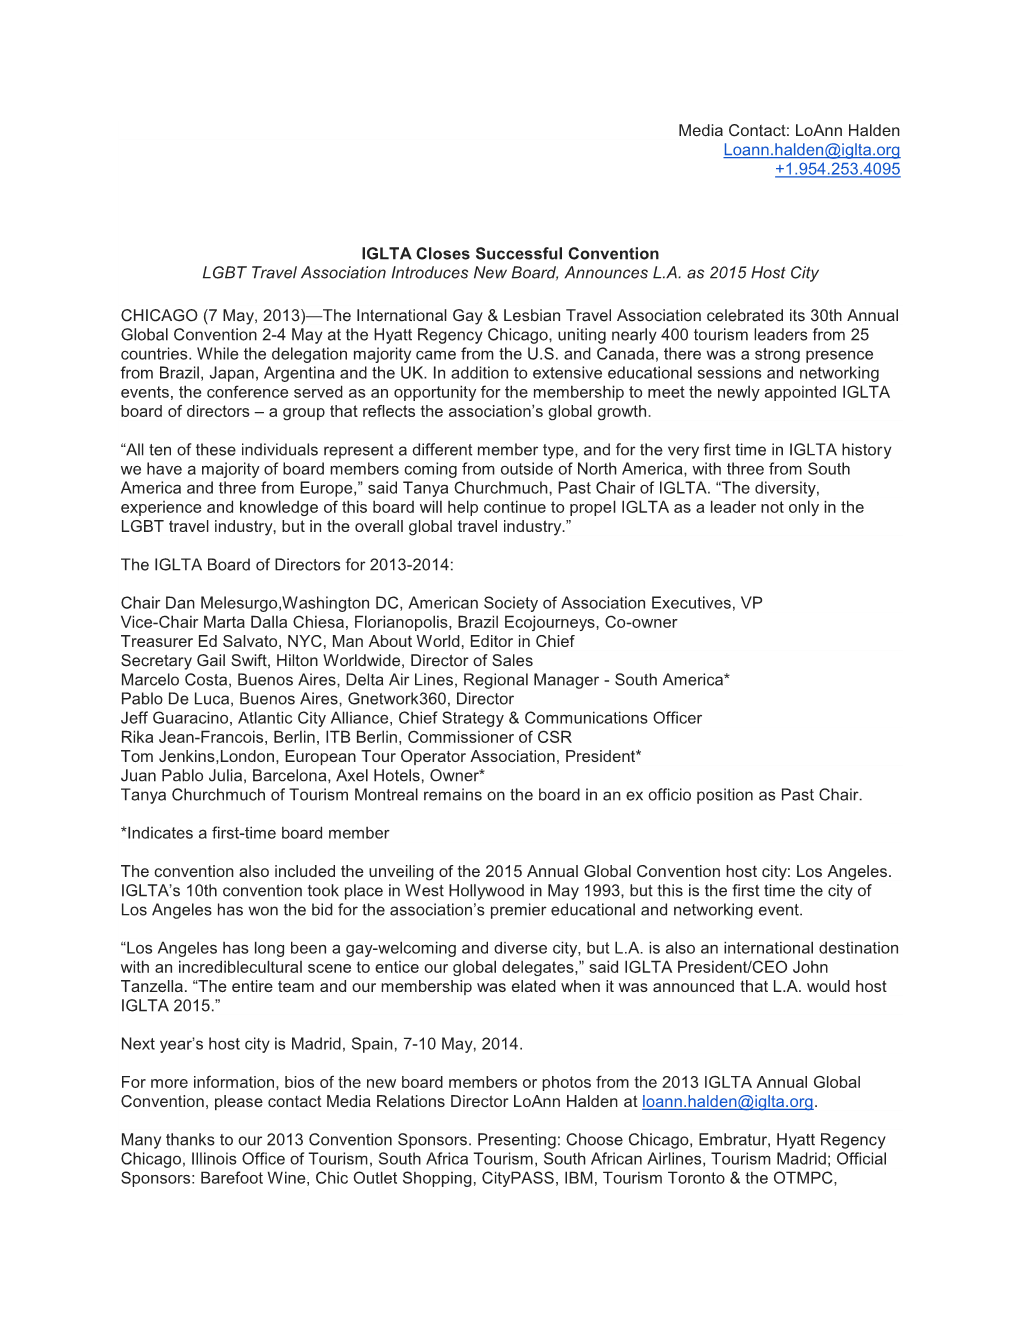 IGLTA Closes Successful Convention LGBT Travel Association Introduces New Board, Announces L.A